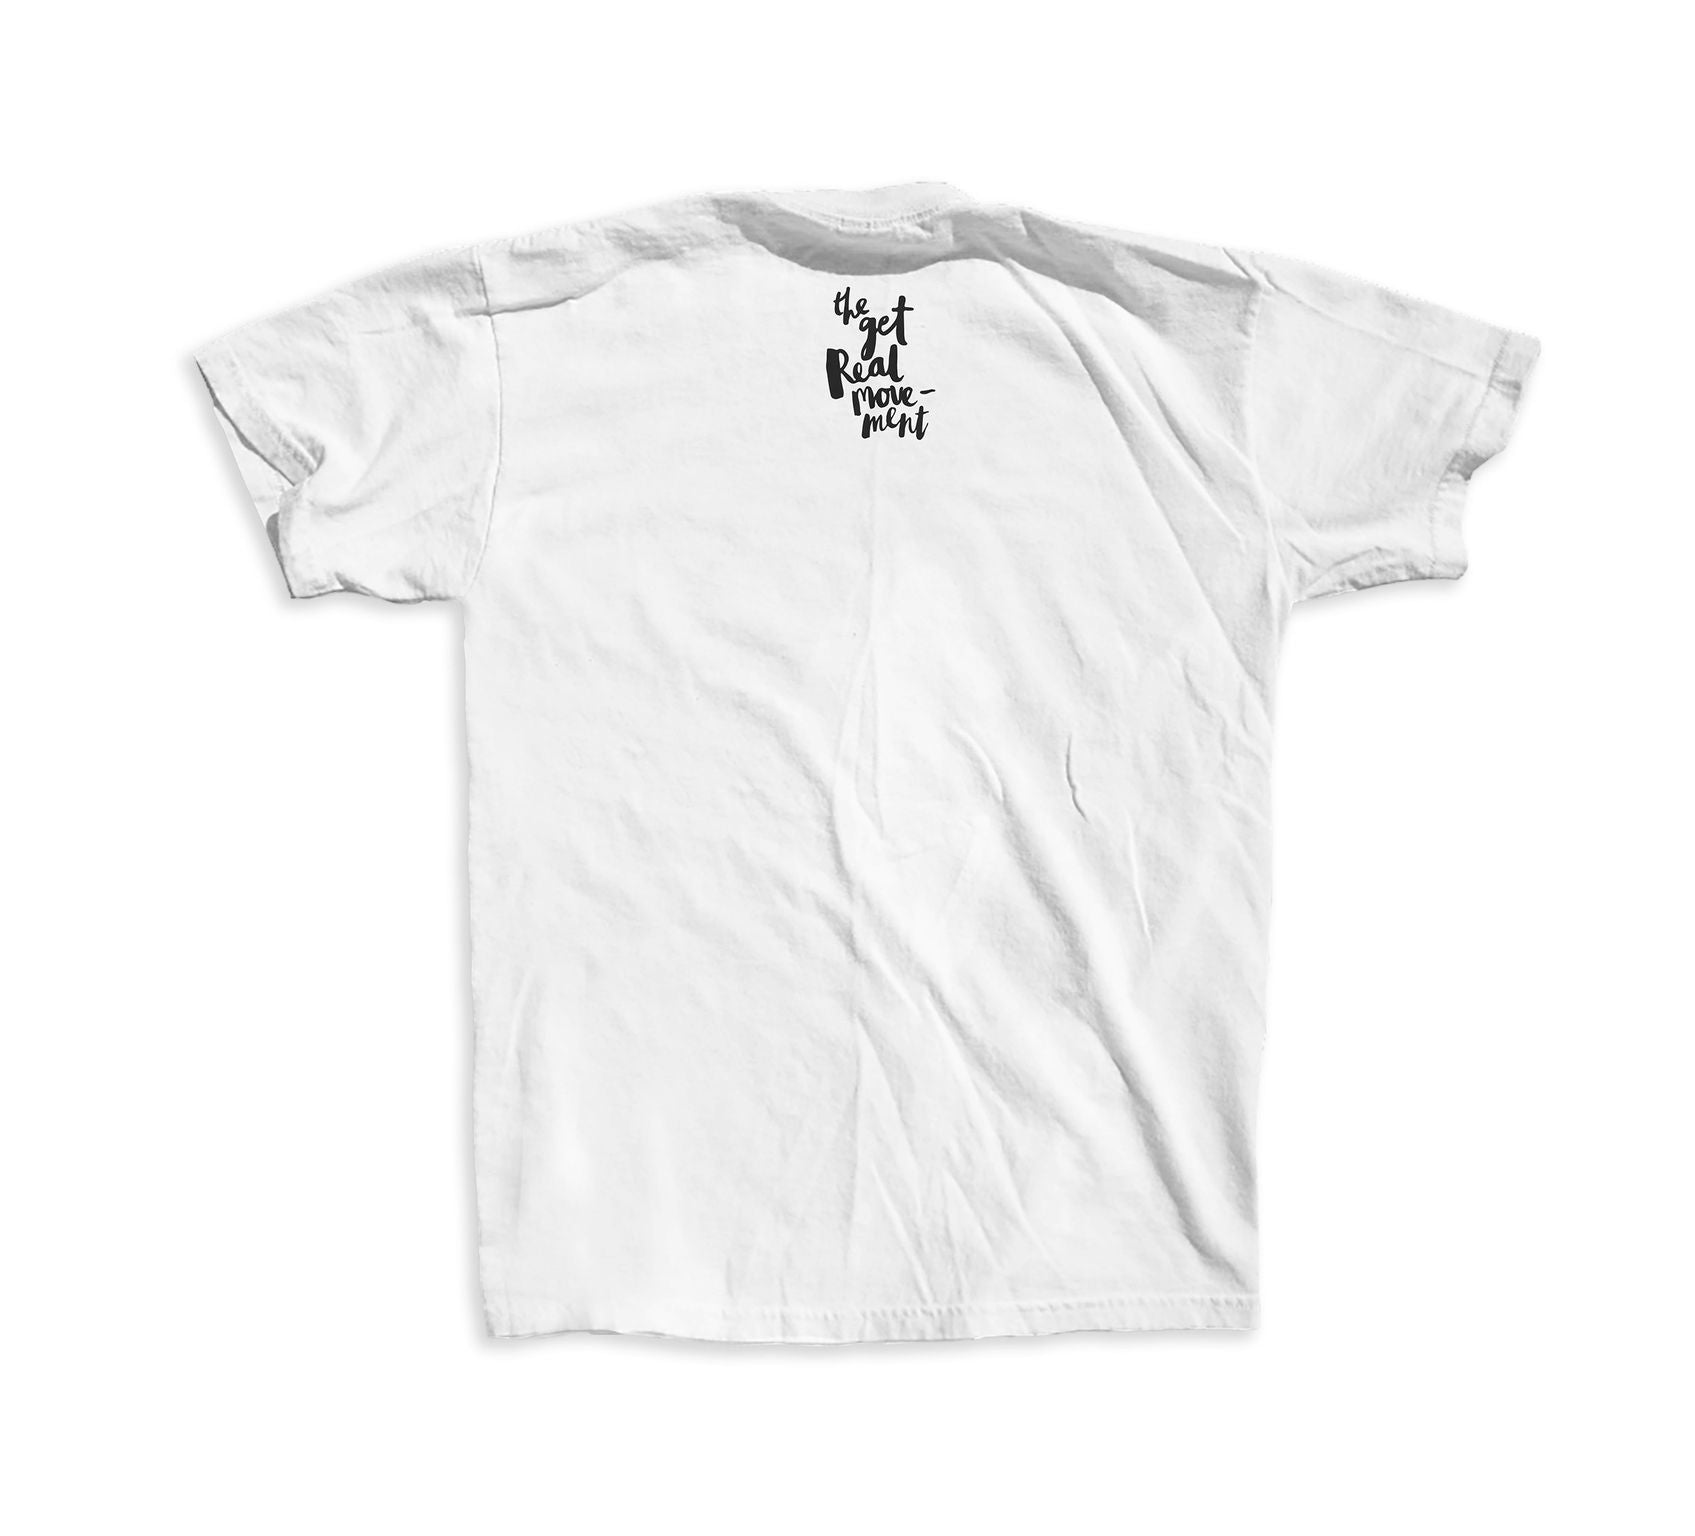 Free To Love - White T-Shirt